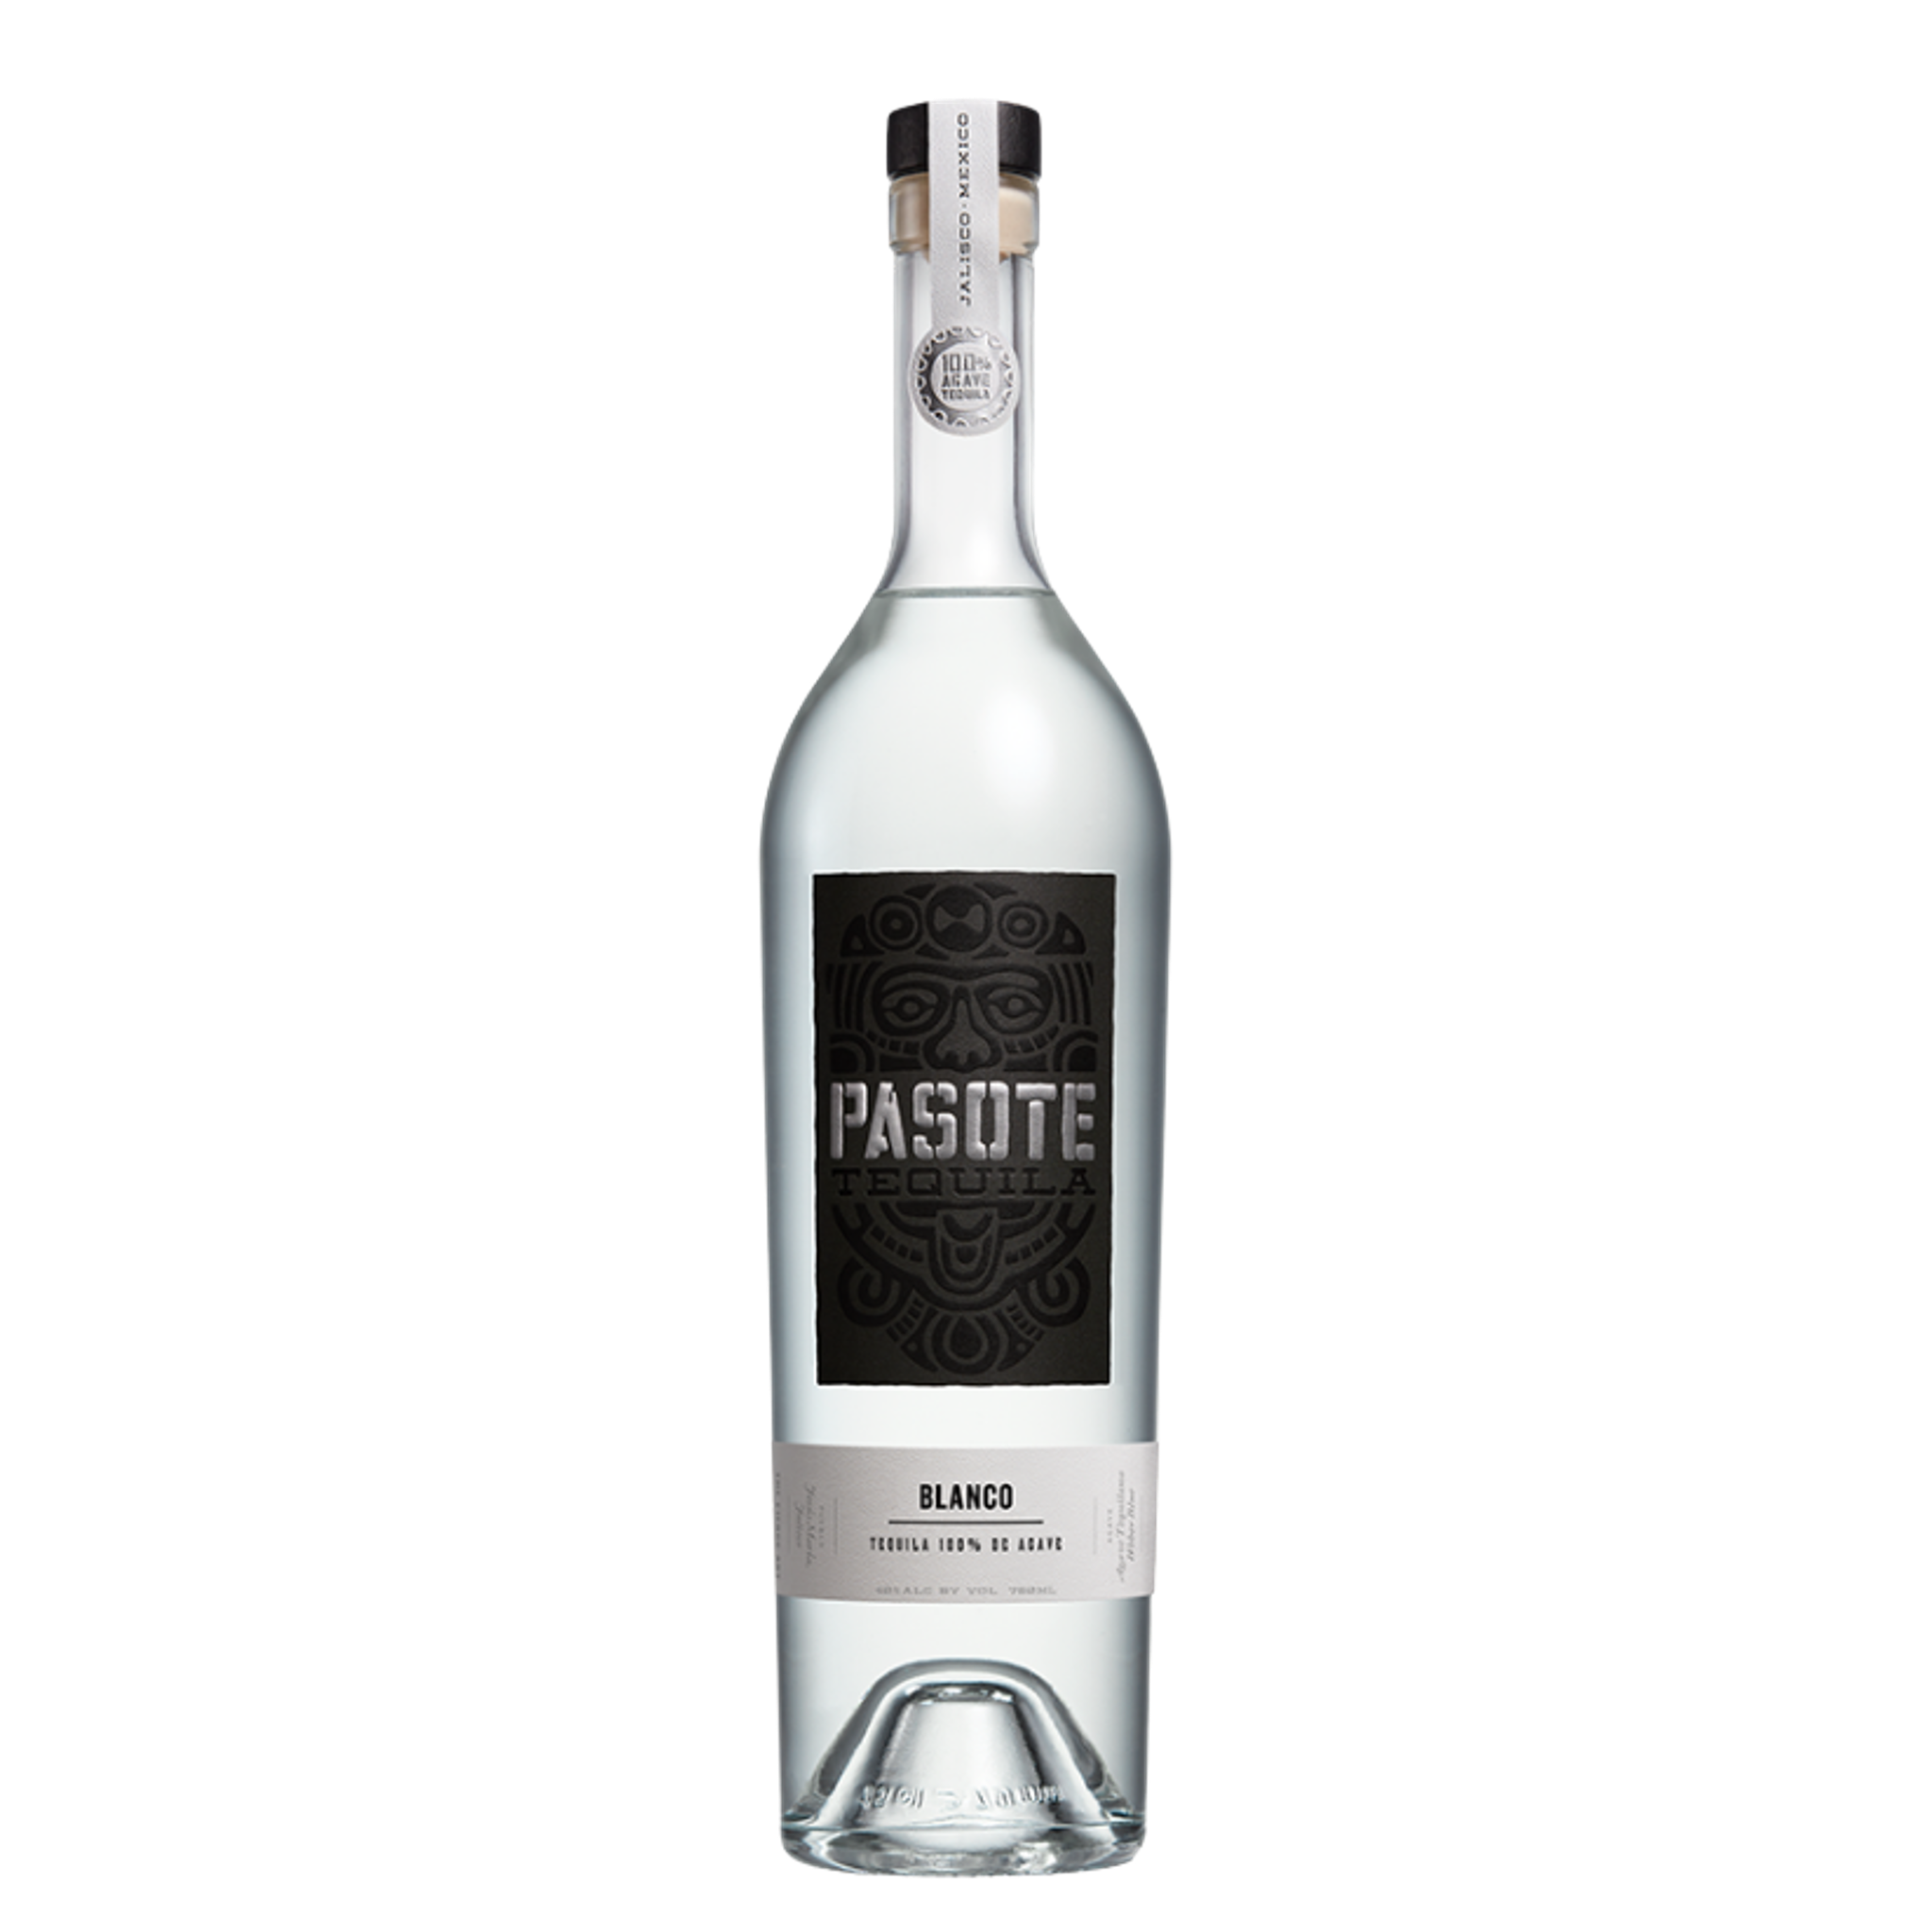 Pasote Blanco Tequila (750ml)